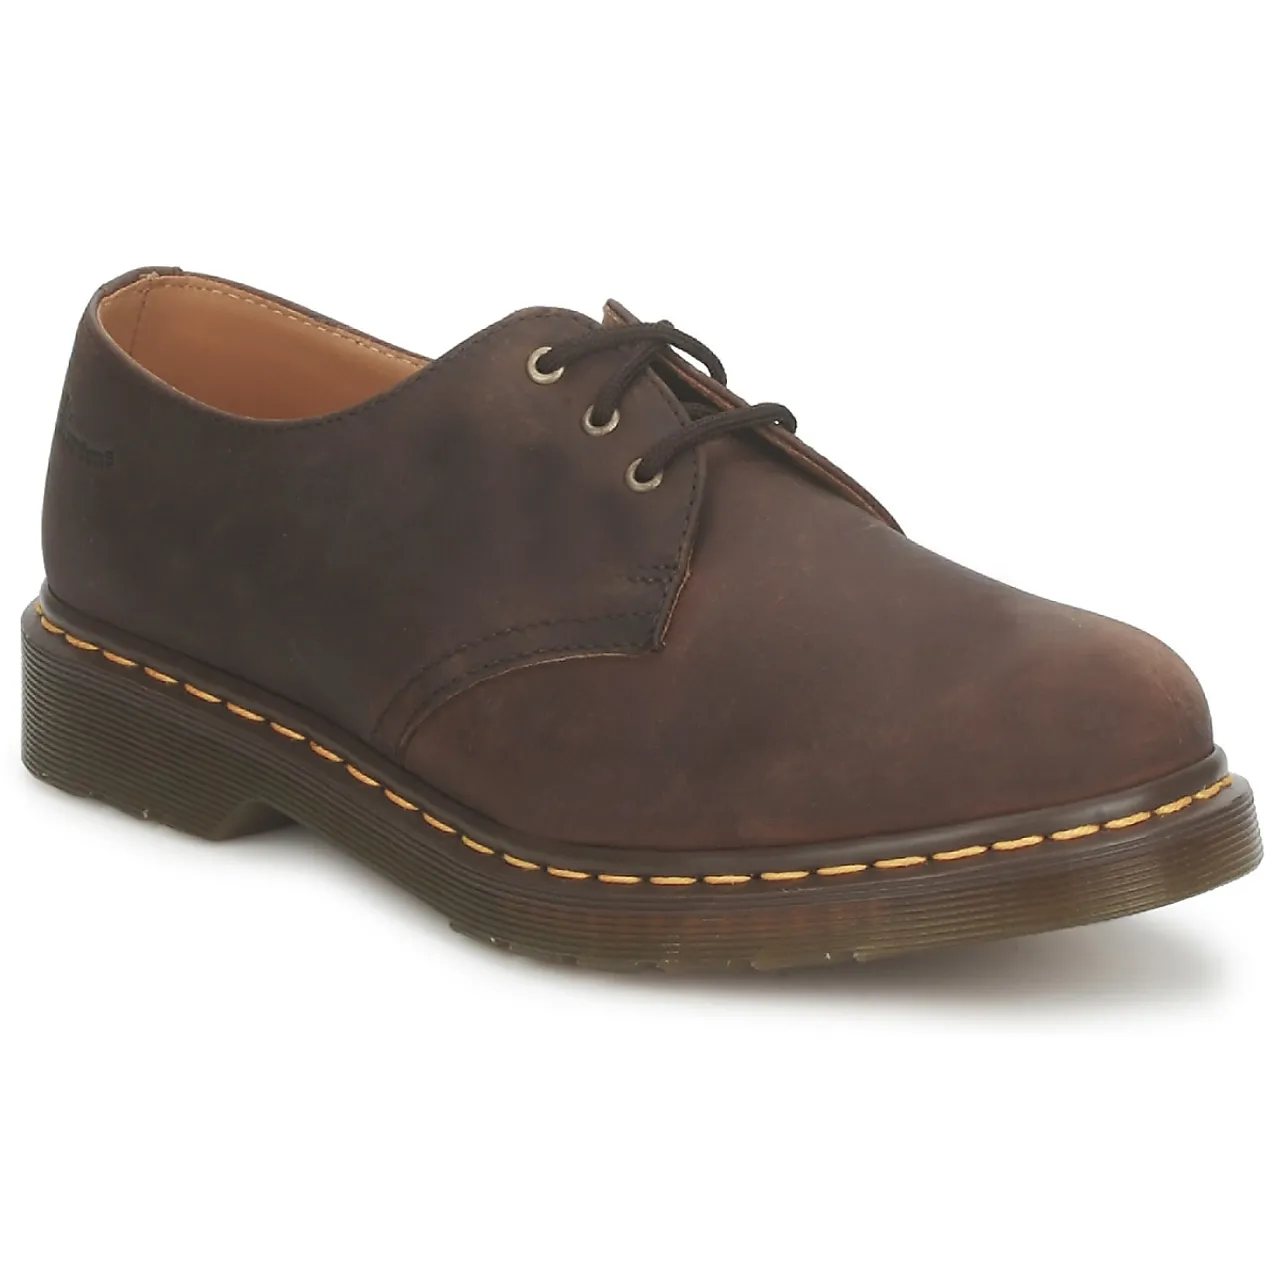 Dr. Martens  1461 3 EYE SHOE  women's Casual Shoes in Brown